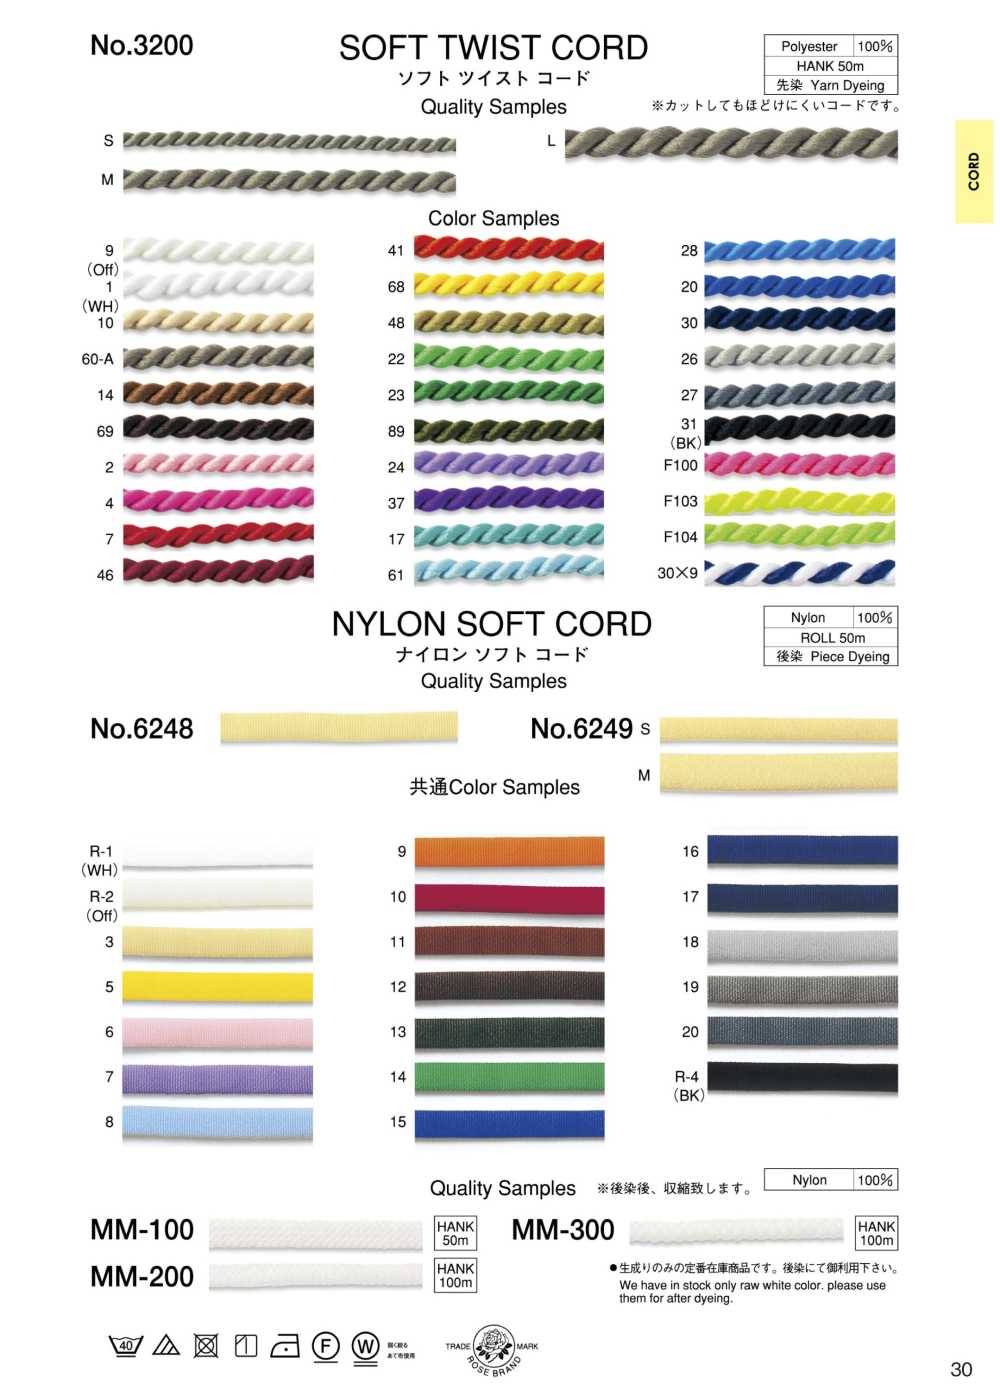 MM-200 Nylon Soft Cord[Ribbon Tape Cord] ROSE BRAND (Marushin)